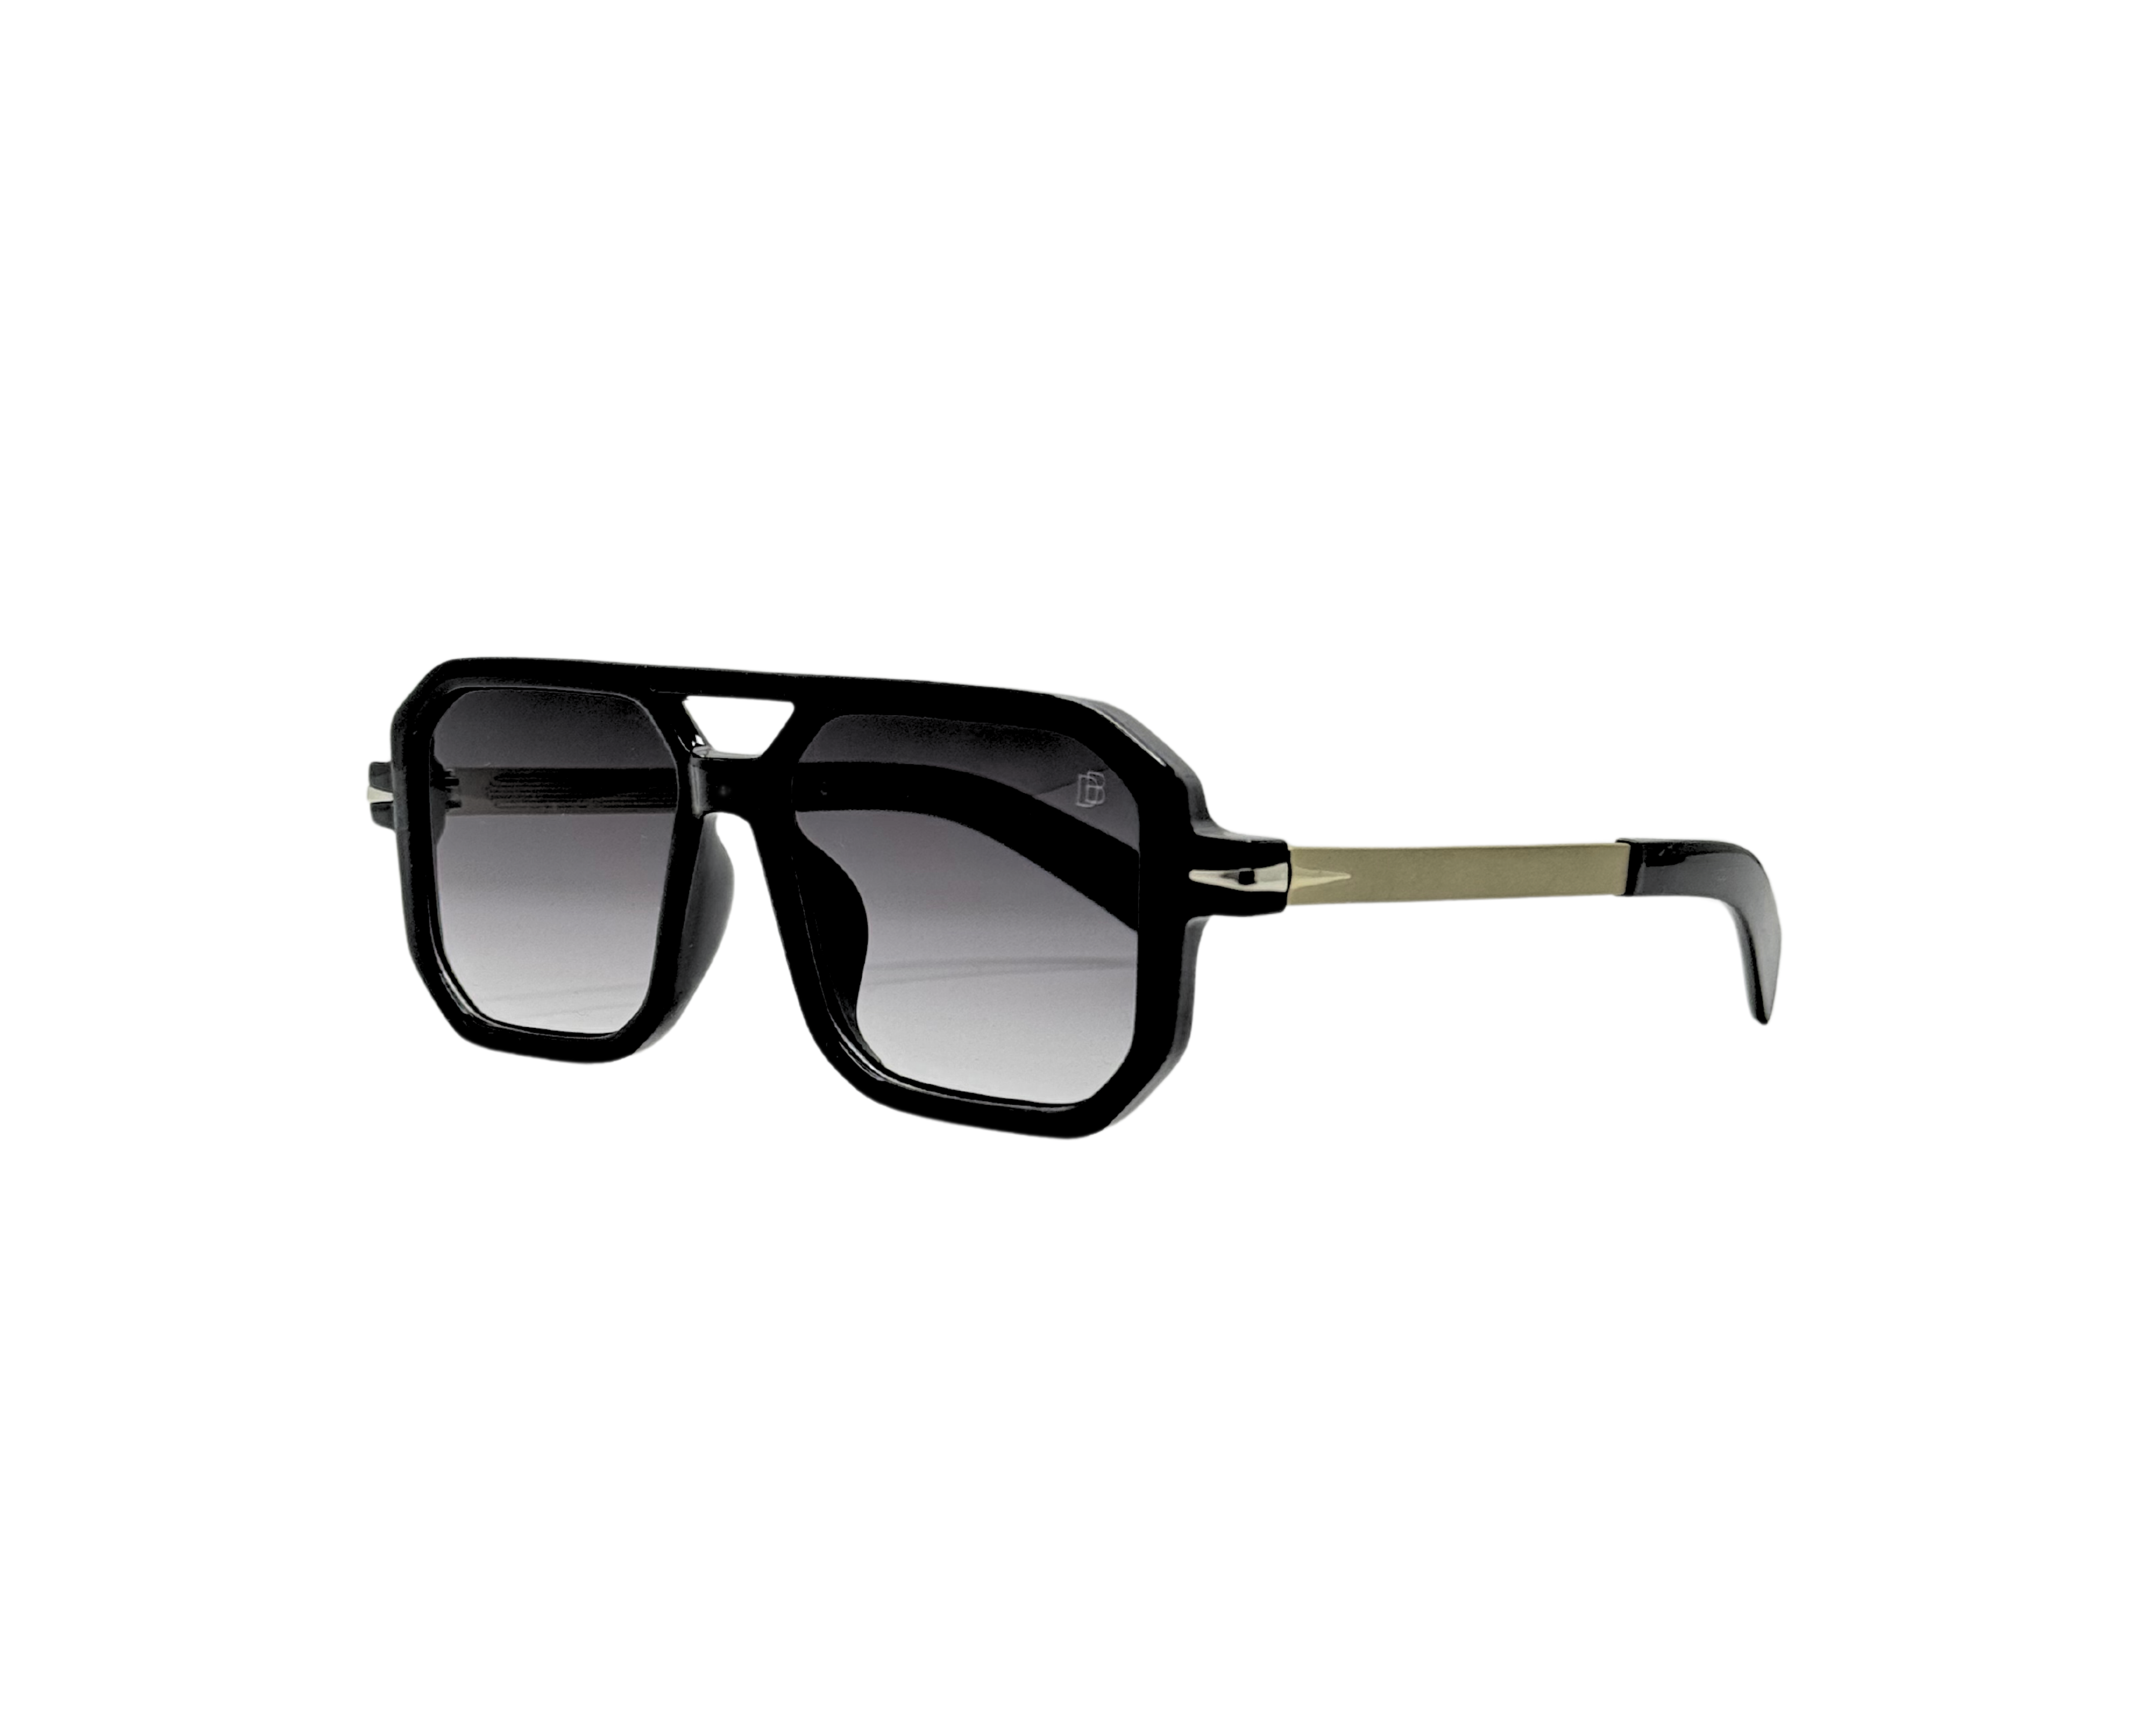 NS Deluxe - 7103 - Black - Sunglasses